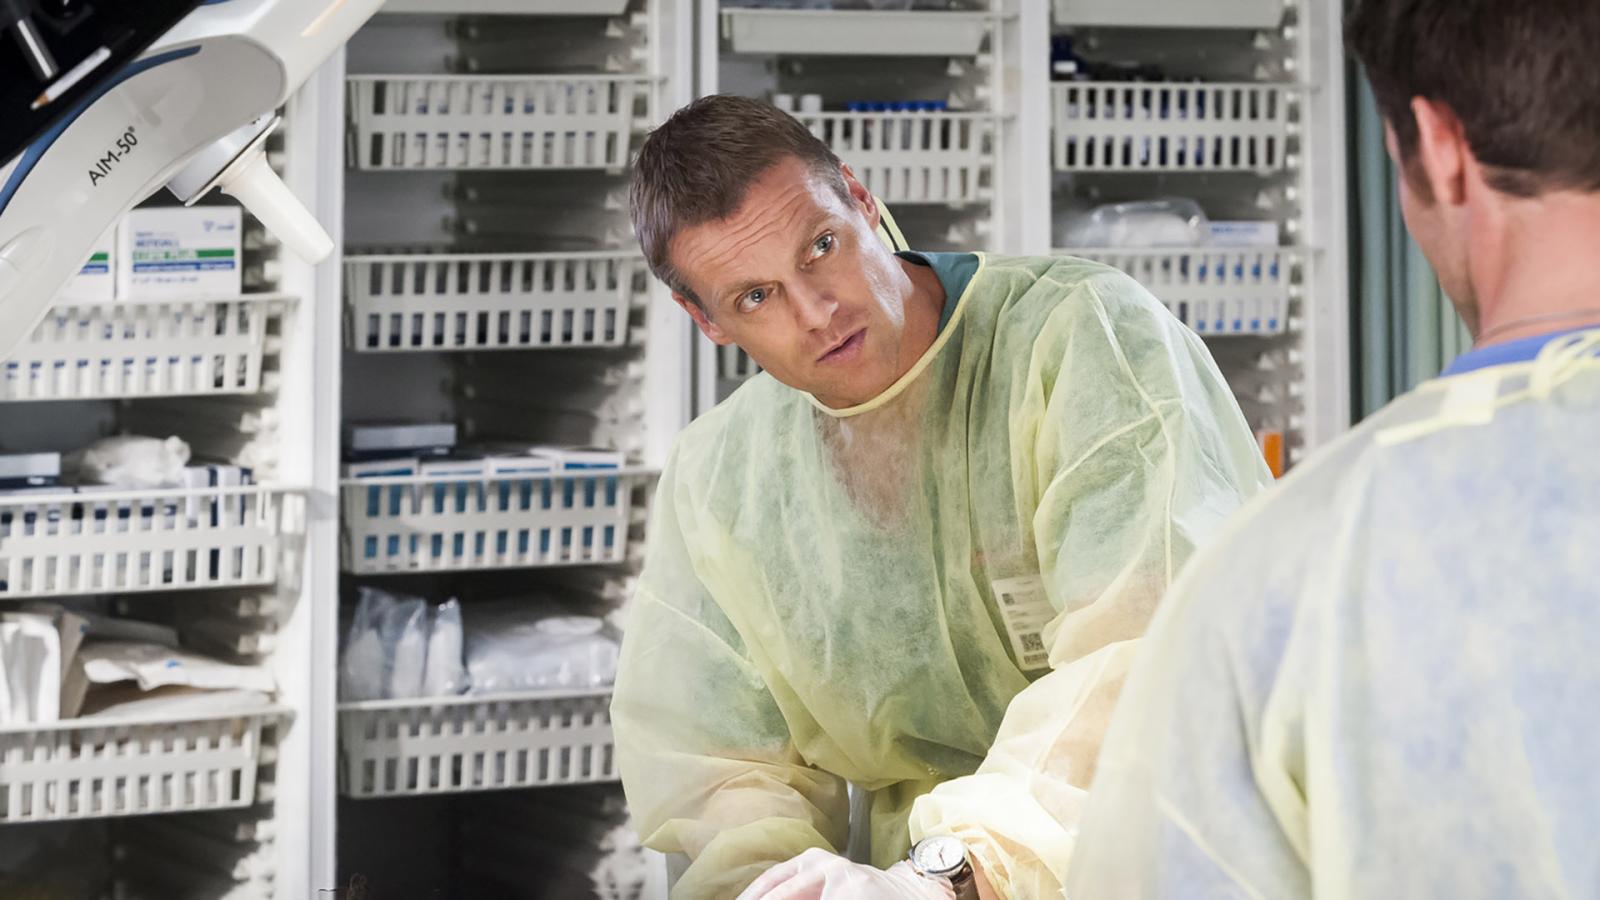 10 Overlooked Medical Dramas Beyond Grey's Anatomy - image 2